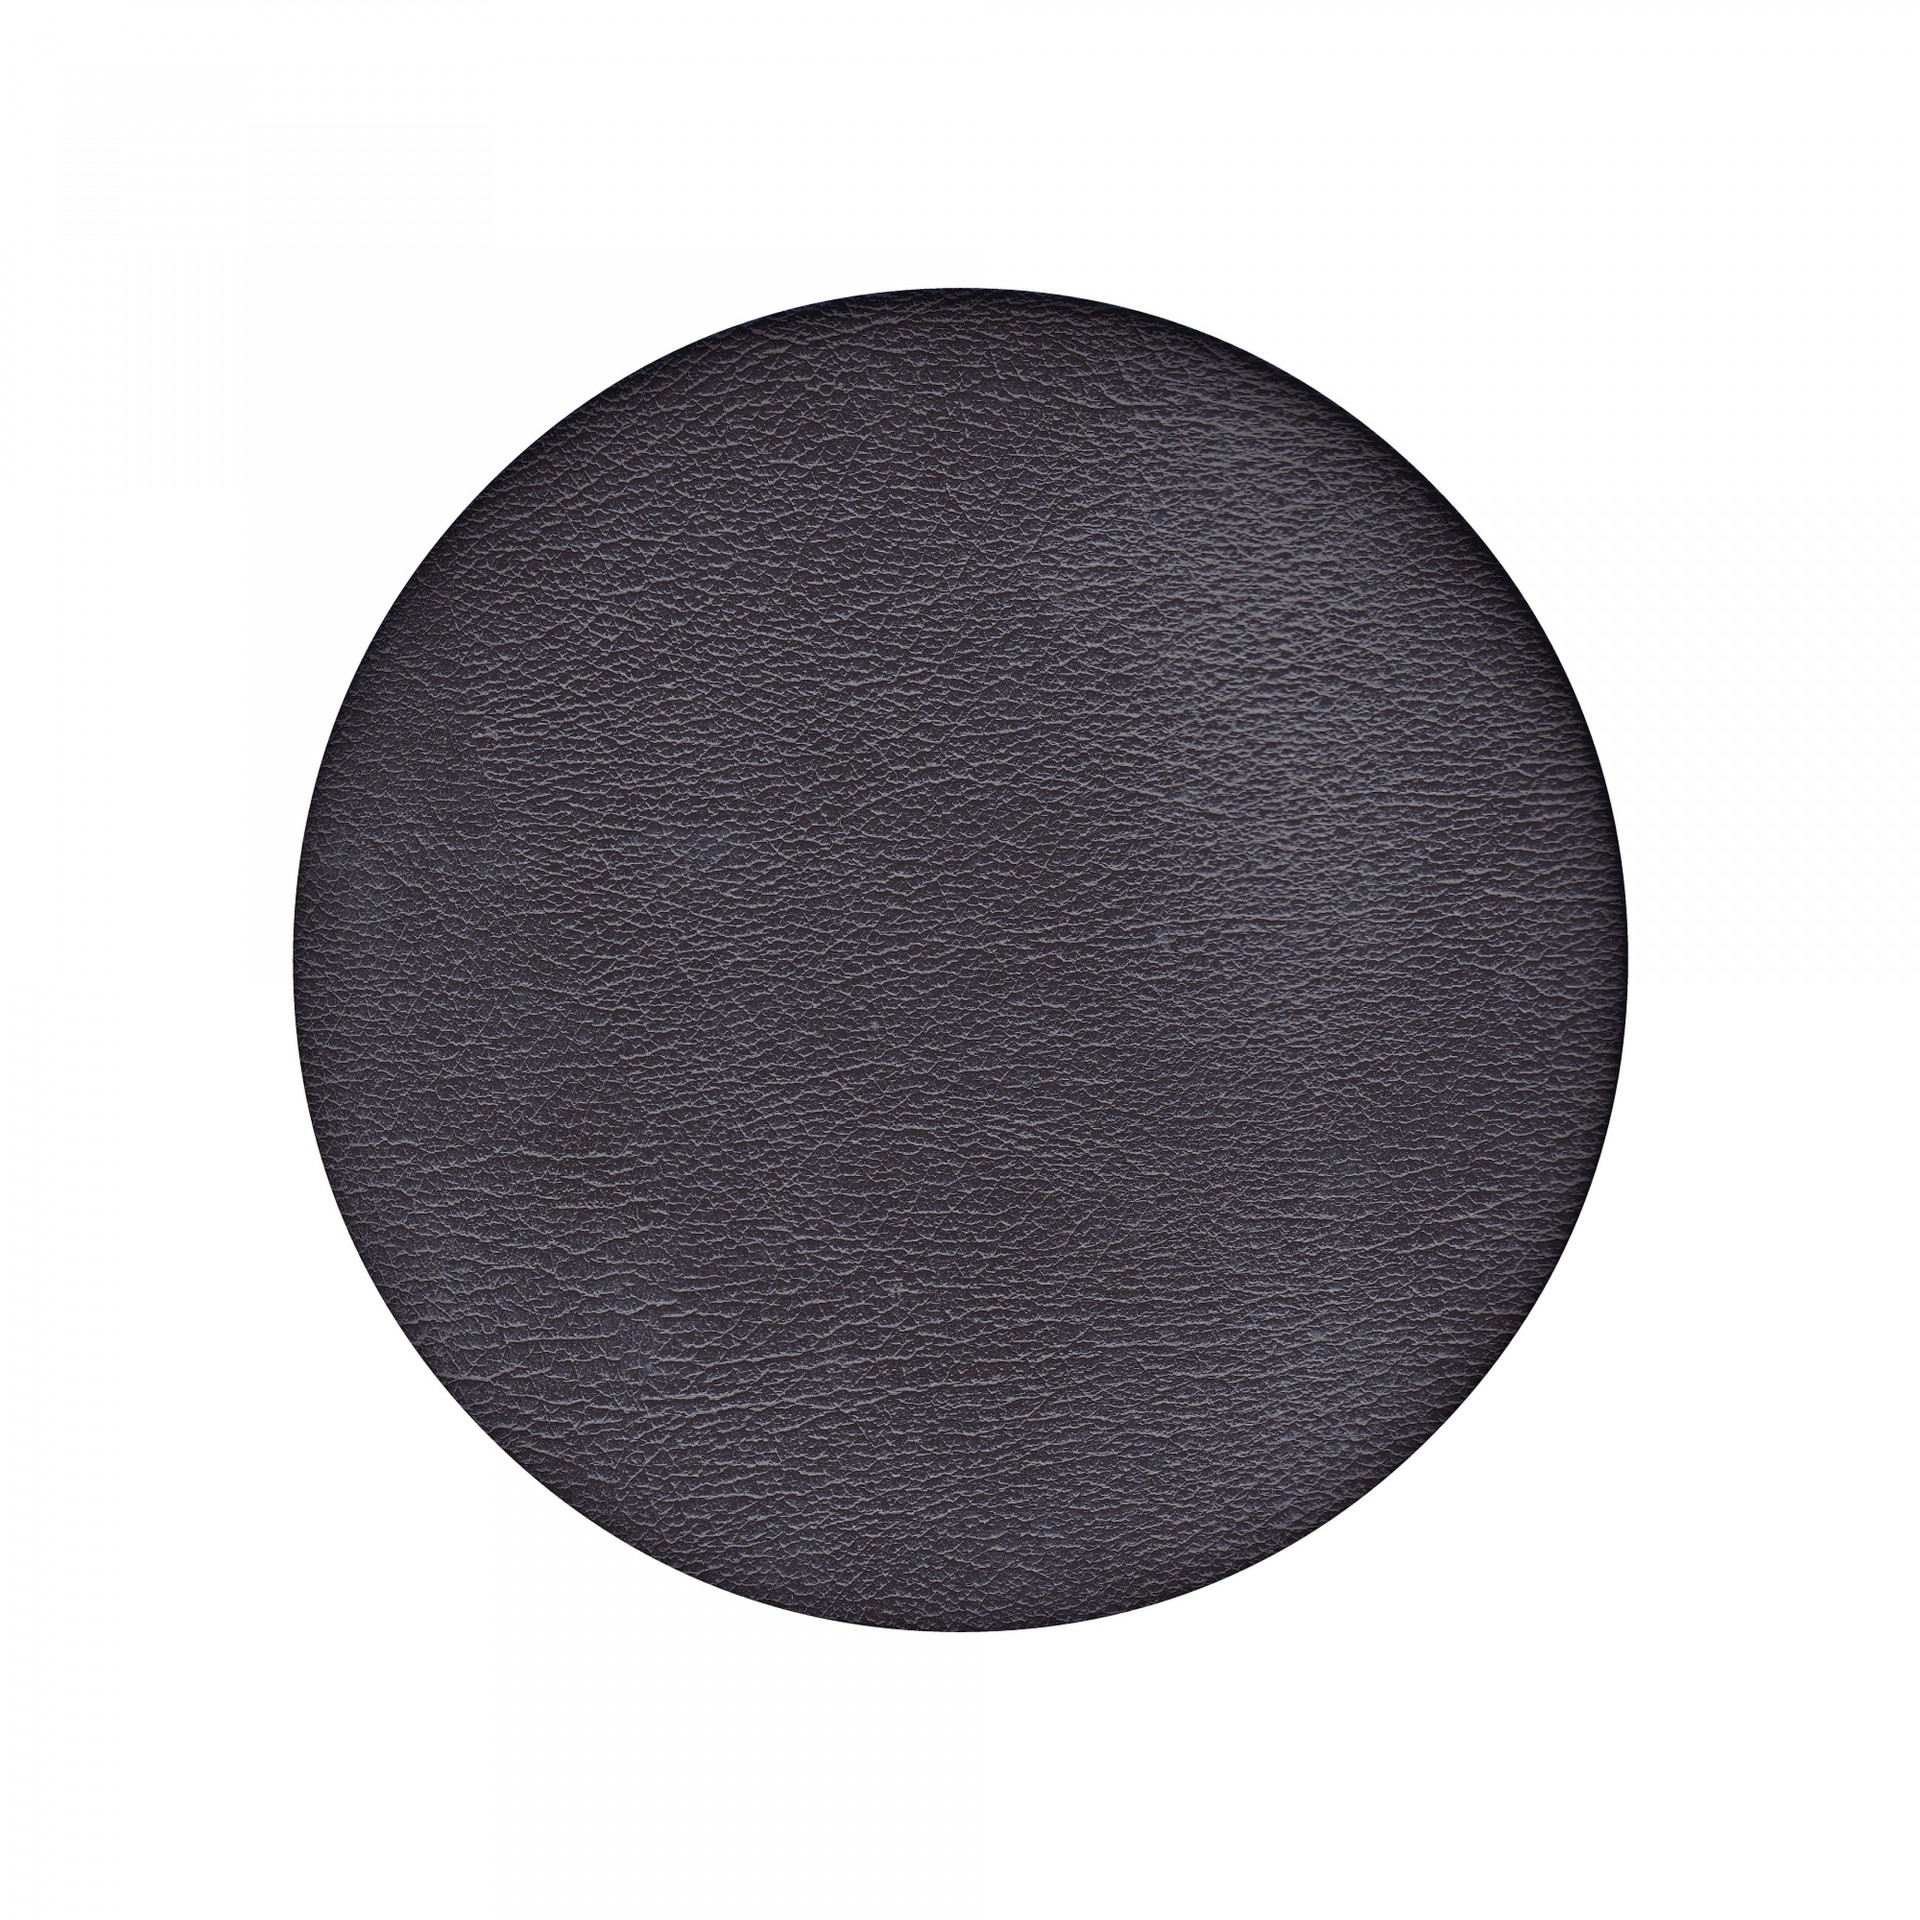 Mat,matt,black,leather,texture - free image from needpix.com